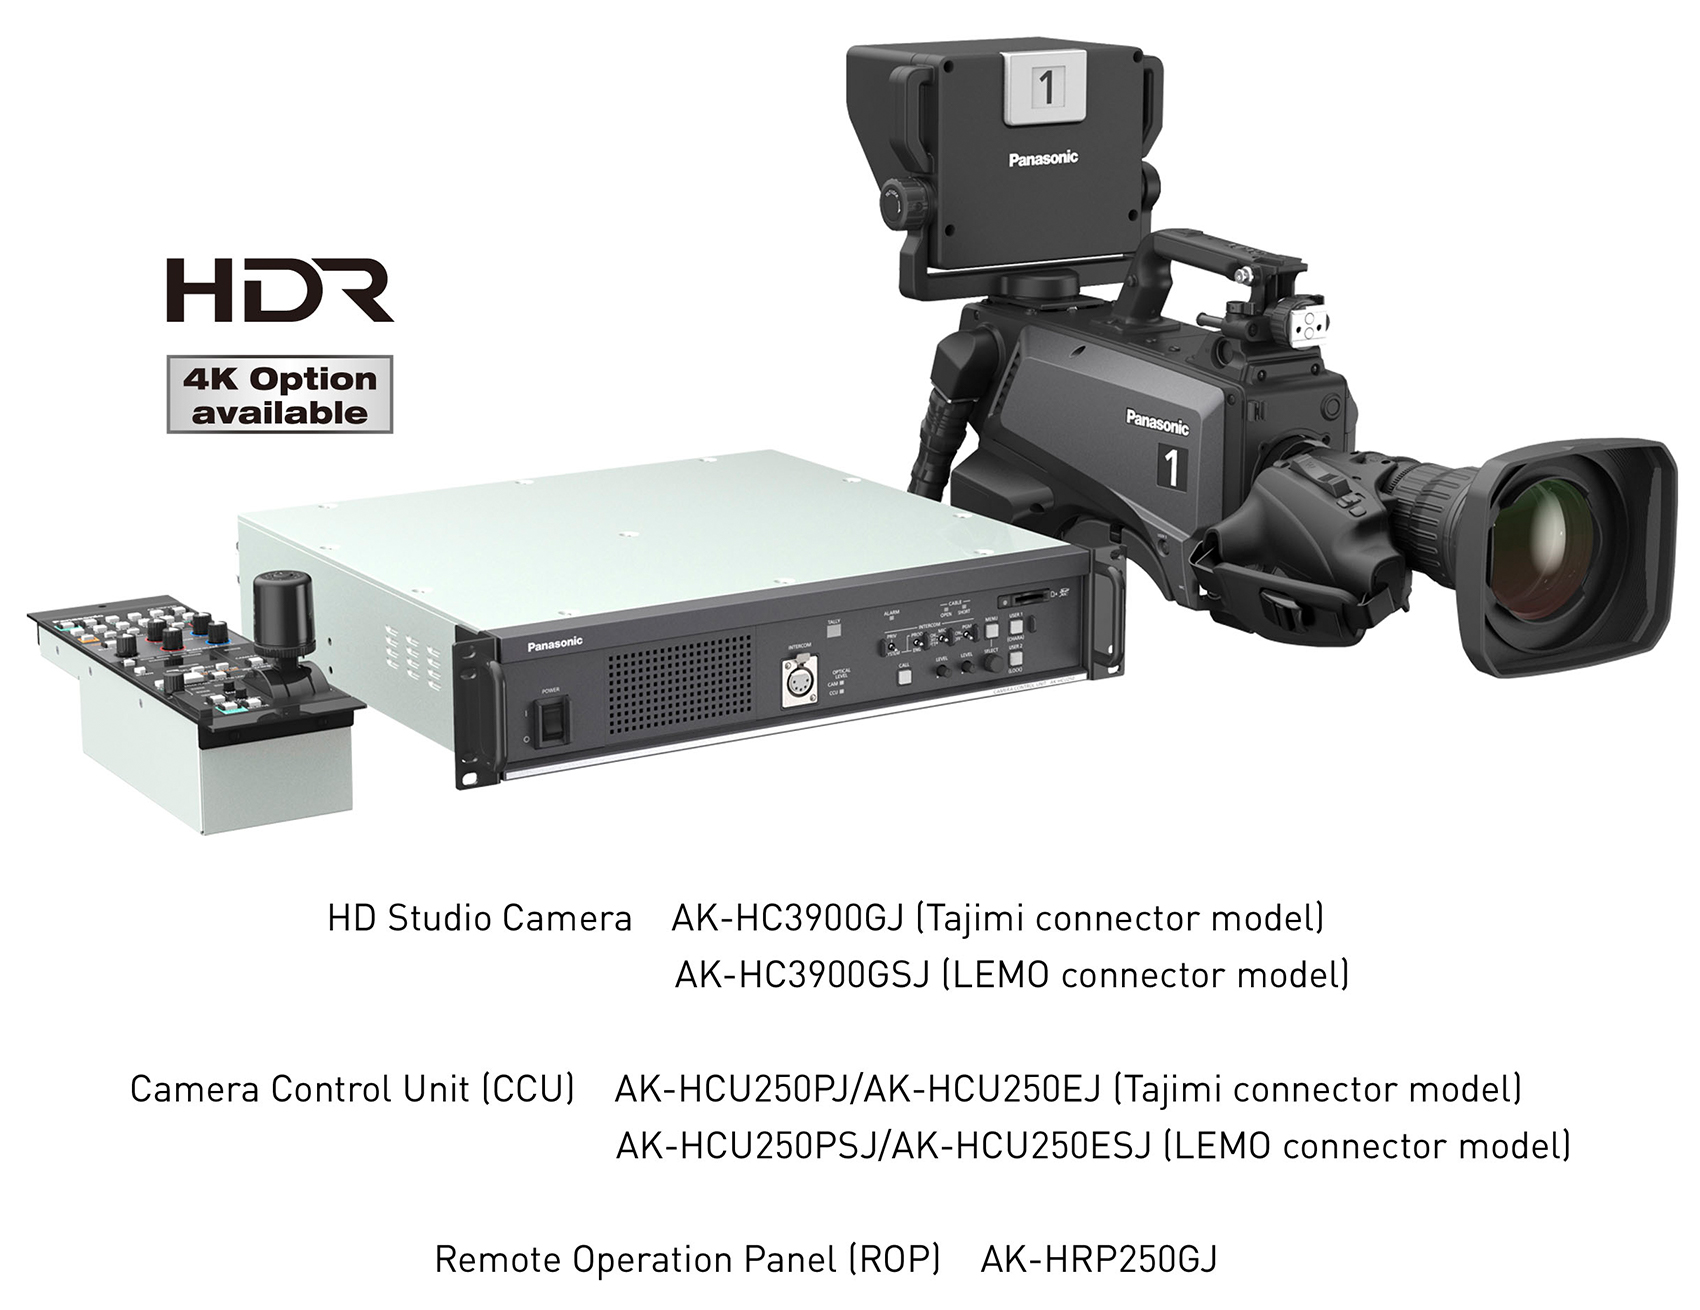 HD Studio Camera, Camera Control Unit (CCU), Remote Operation Panel (ROP)